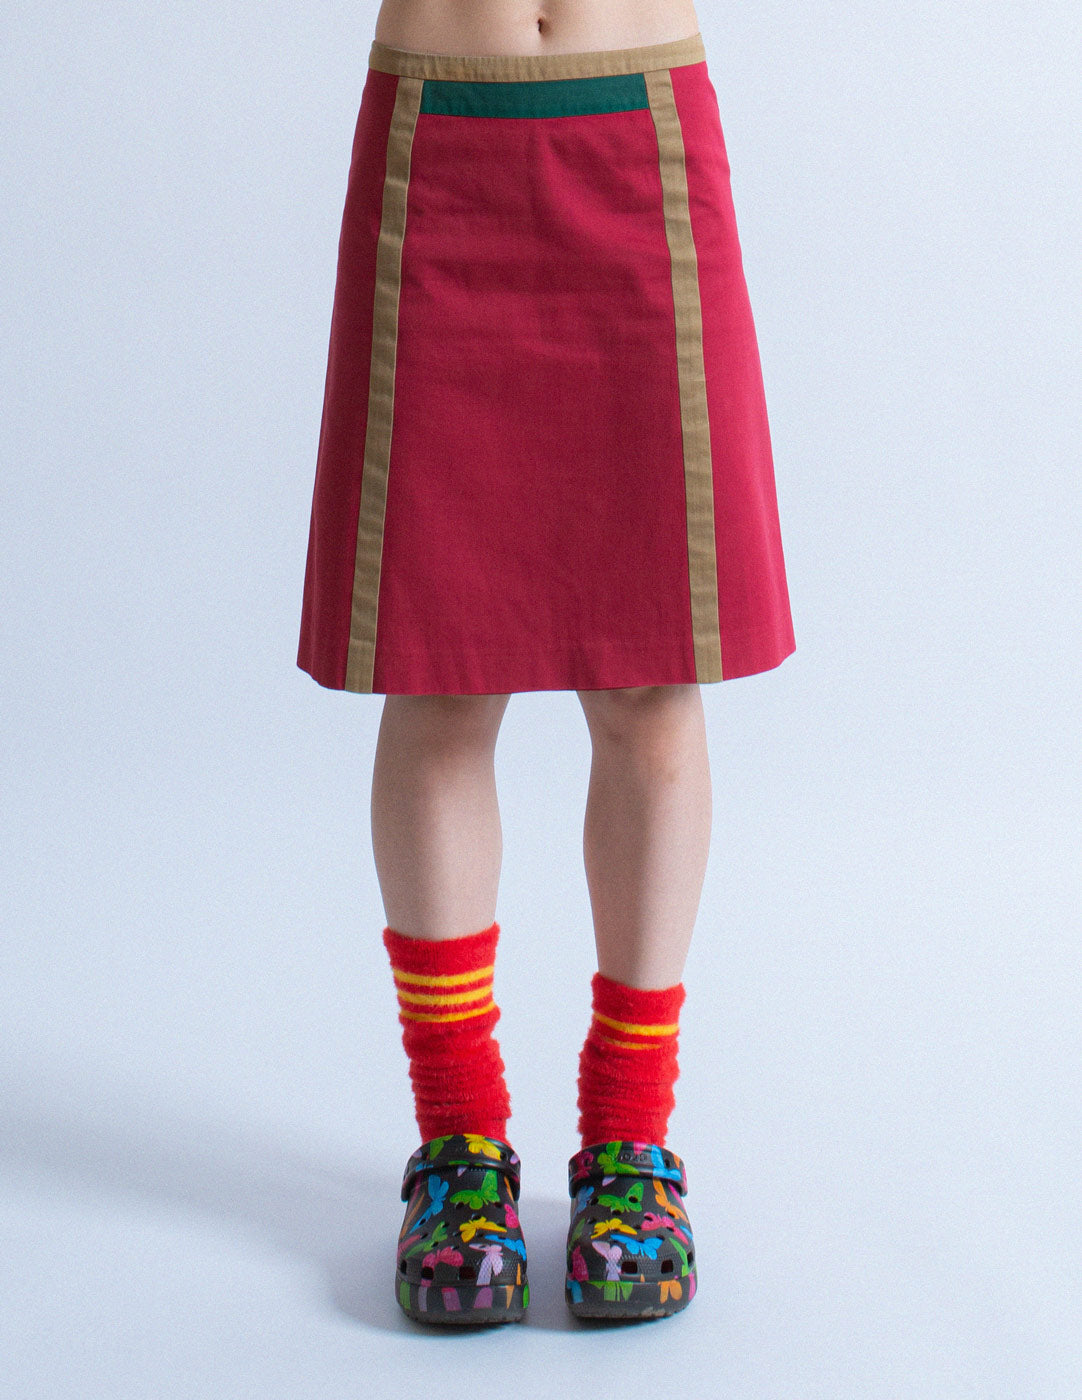 Prada tri-colored cotton skirt front detail